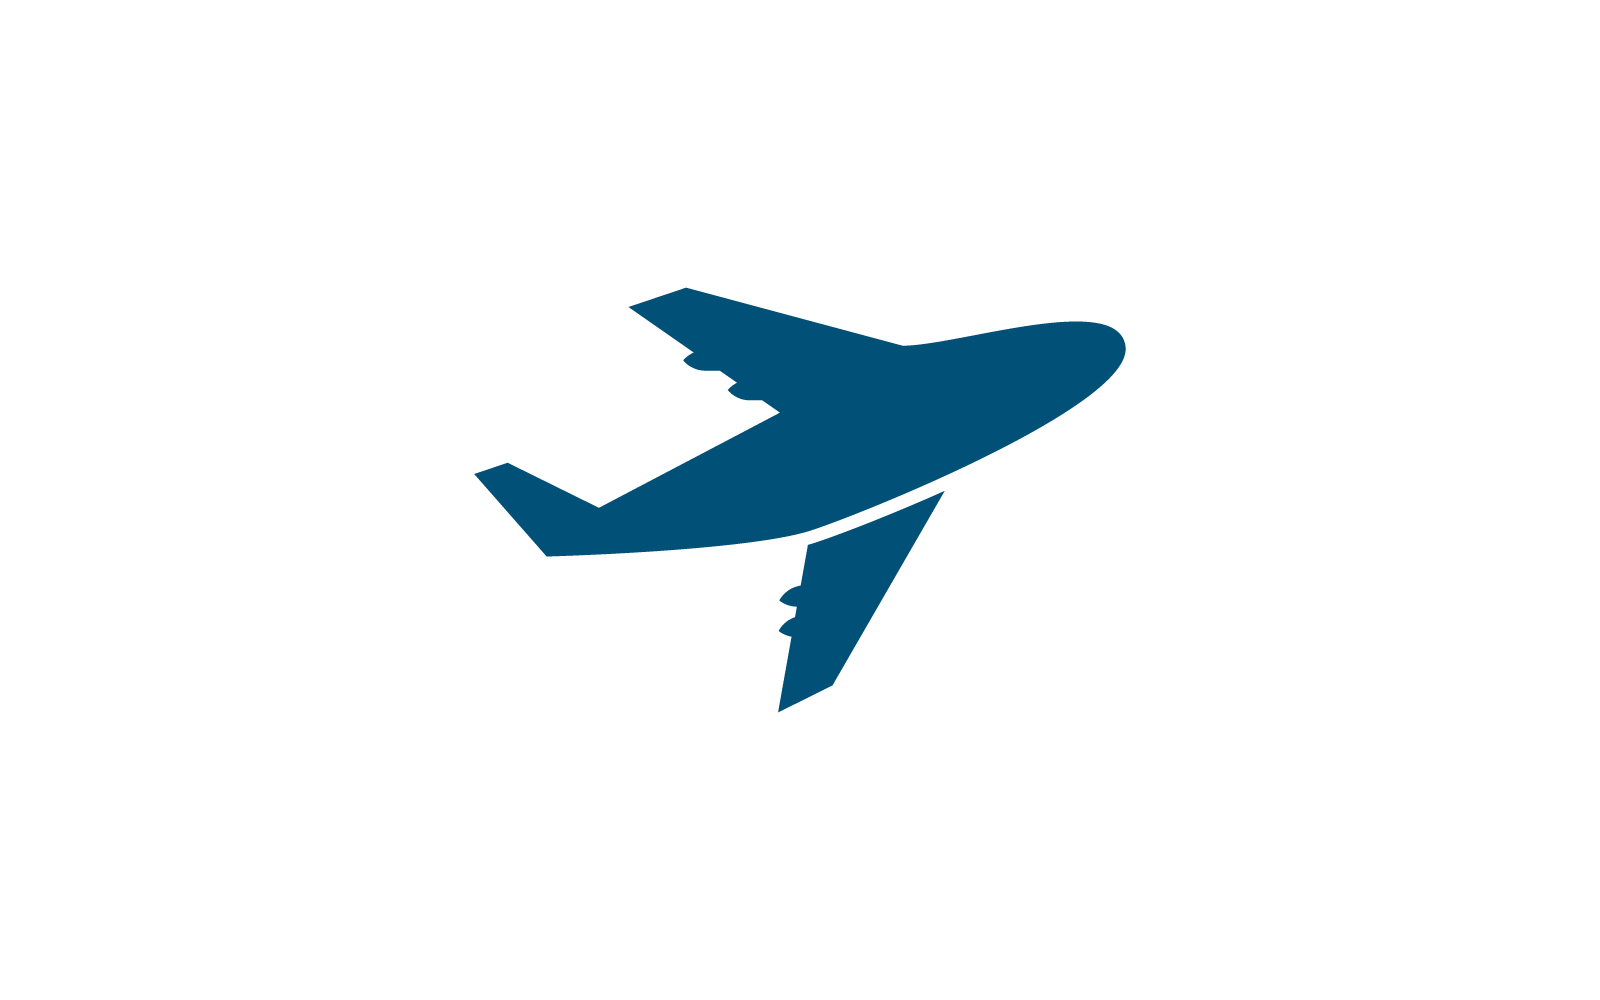 Шаблон векторного плоского дизайна логотипа Air Plane